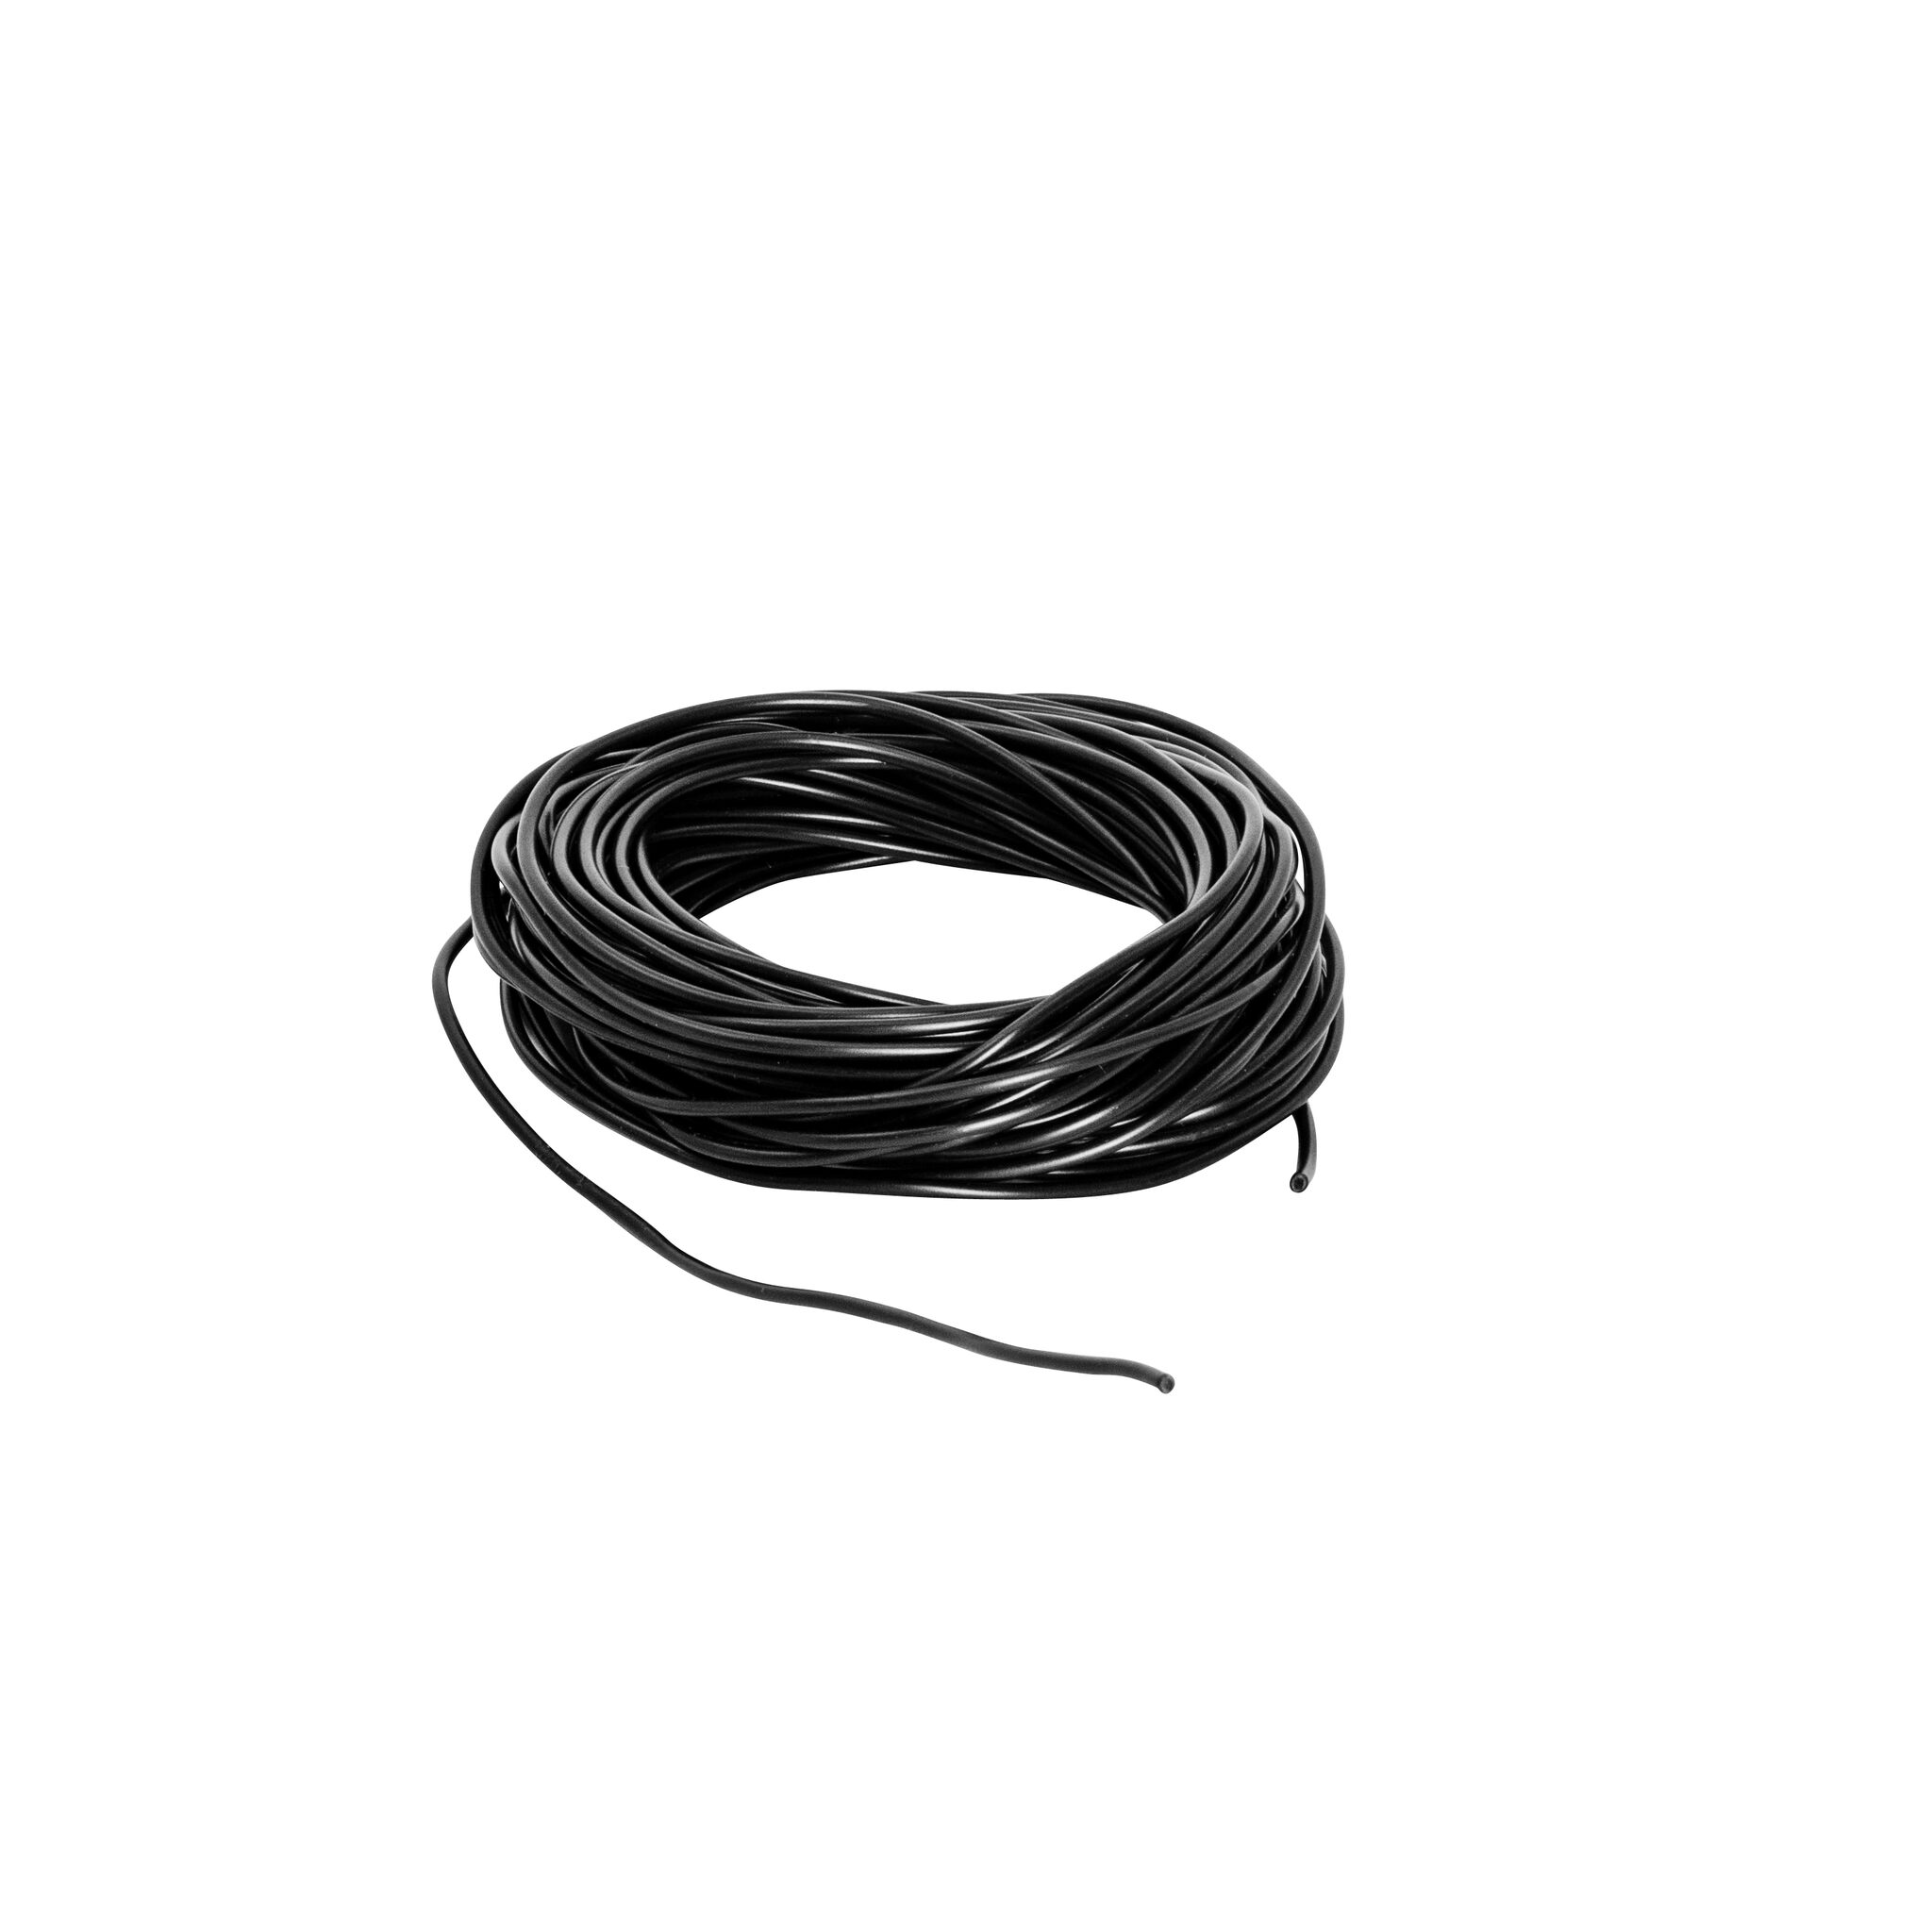 Automotive cable, single core, 10 meters